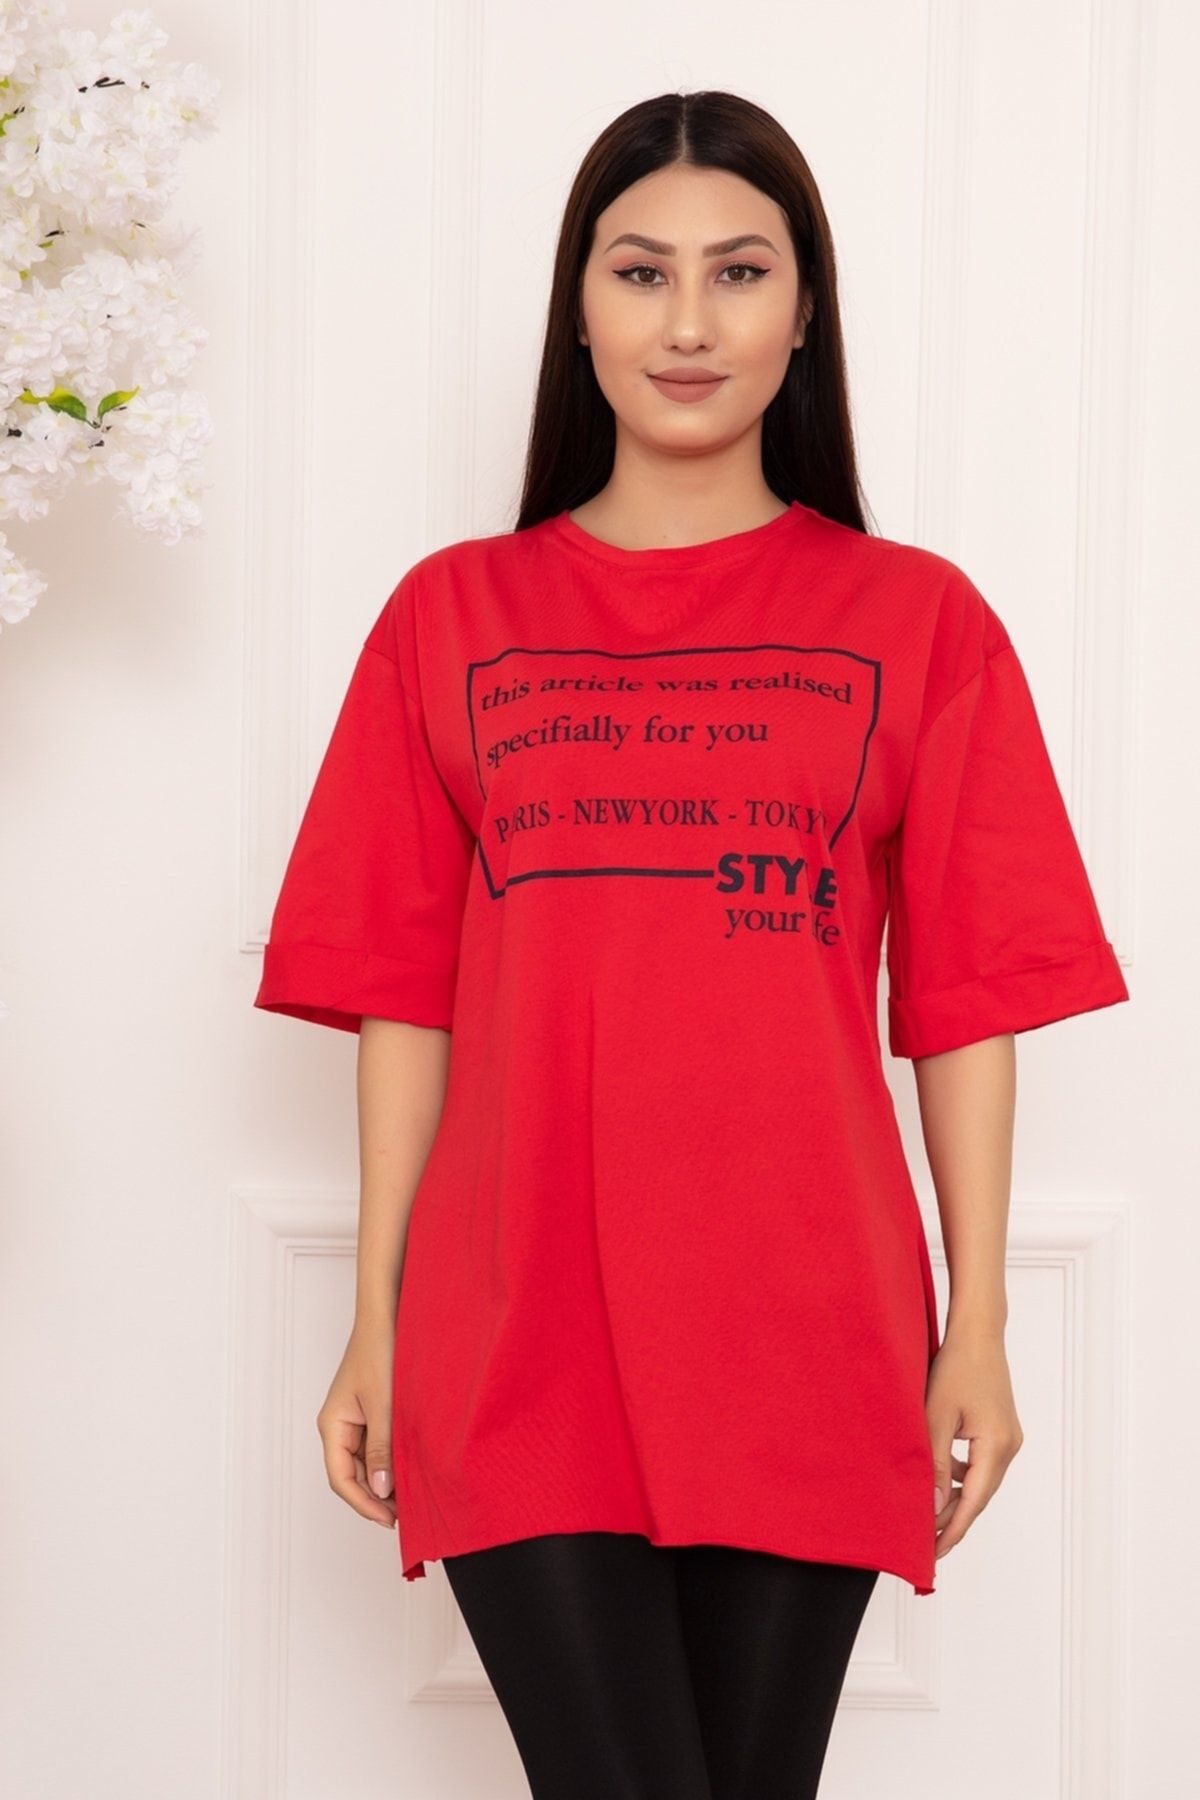 PULLIMM Bayan Style Your Life Baskılı Salaş Esp07 T-shirt